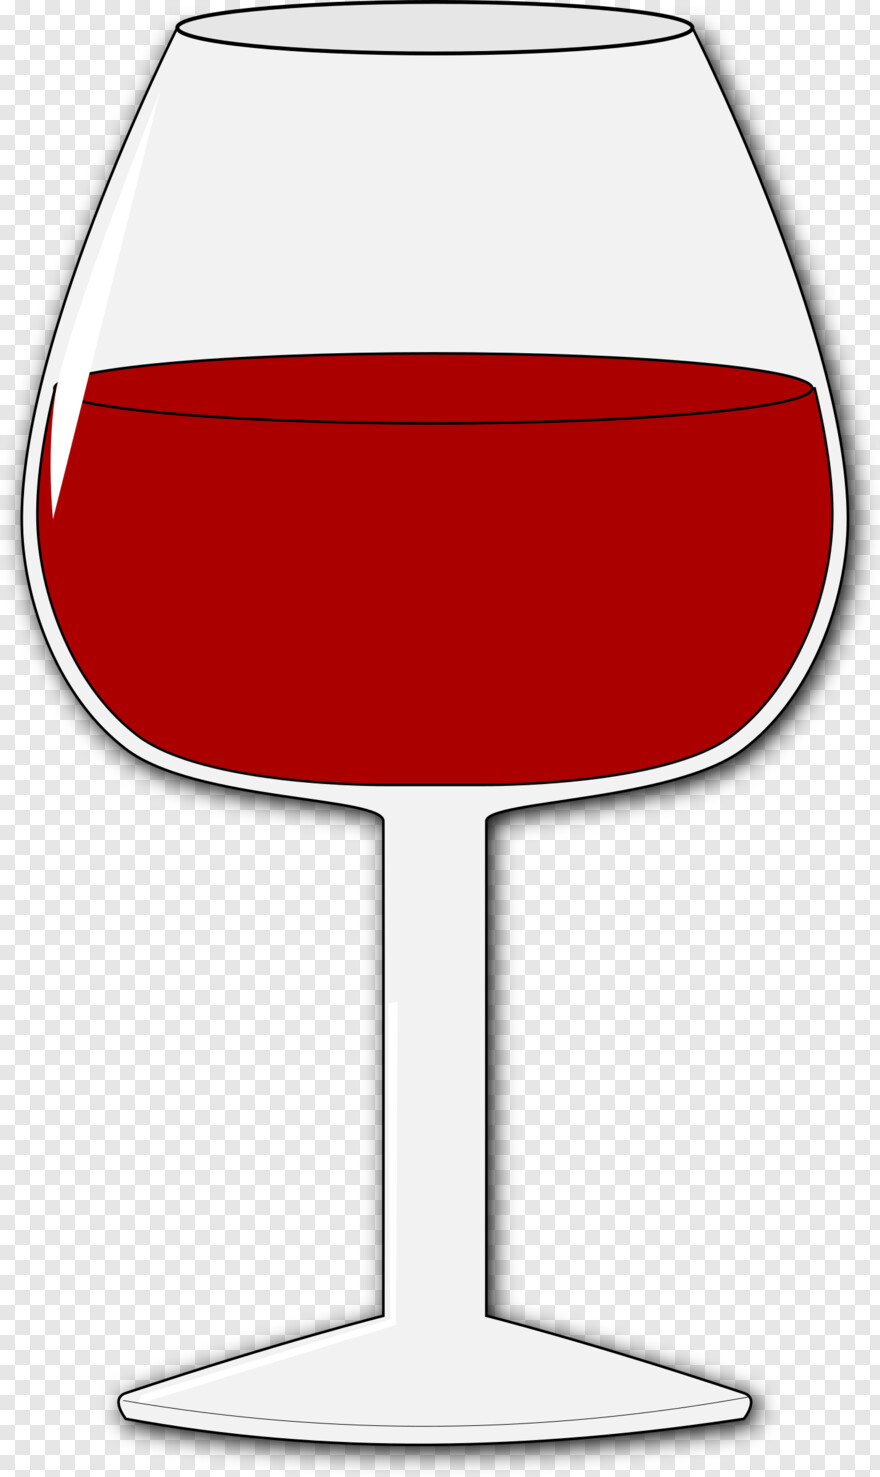 wine-glass-icon # 364571